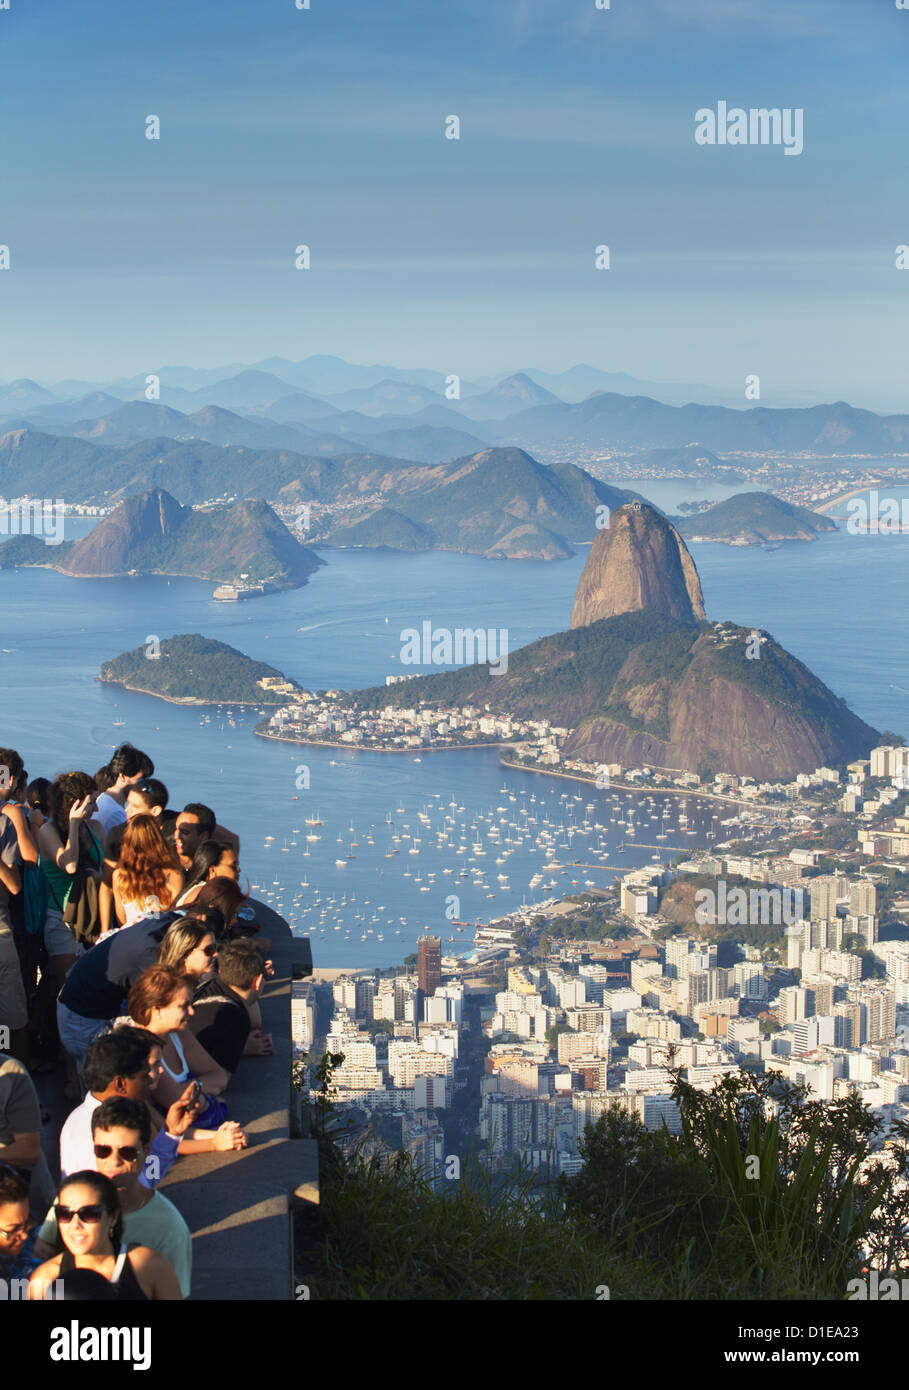 Tourists enjoying view of Sugar Loaf Mountain (Pao de Acucar) and Botafogo Bay from Corvocado, Rio de Janeiro, Brazil Stock Photo